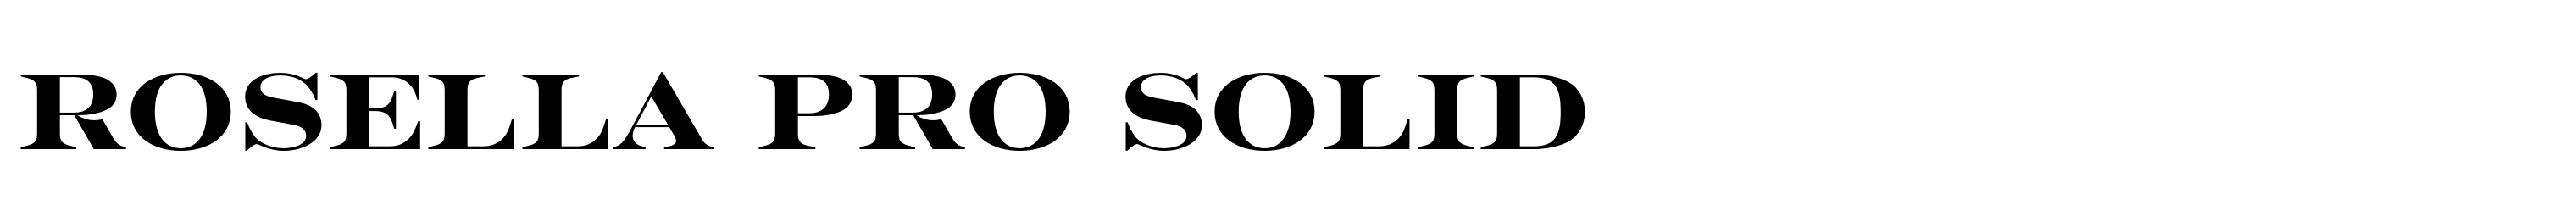 Rosella Pro Solid